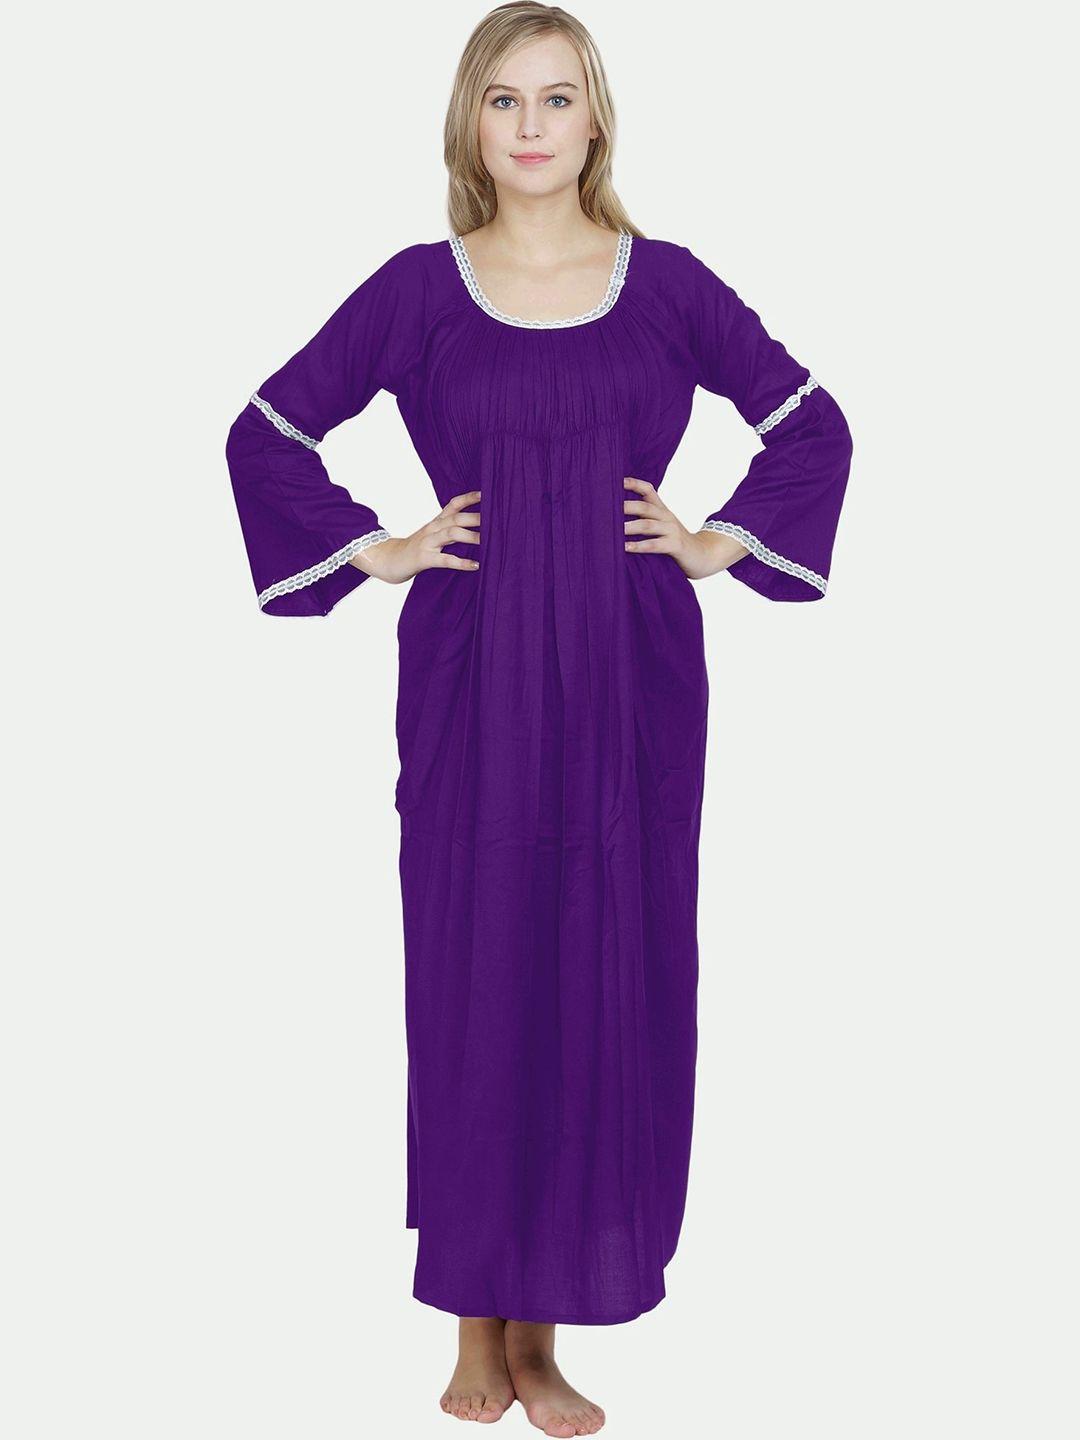 patrorna-women-purple-solid-round-neck-maxi-dress